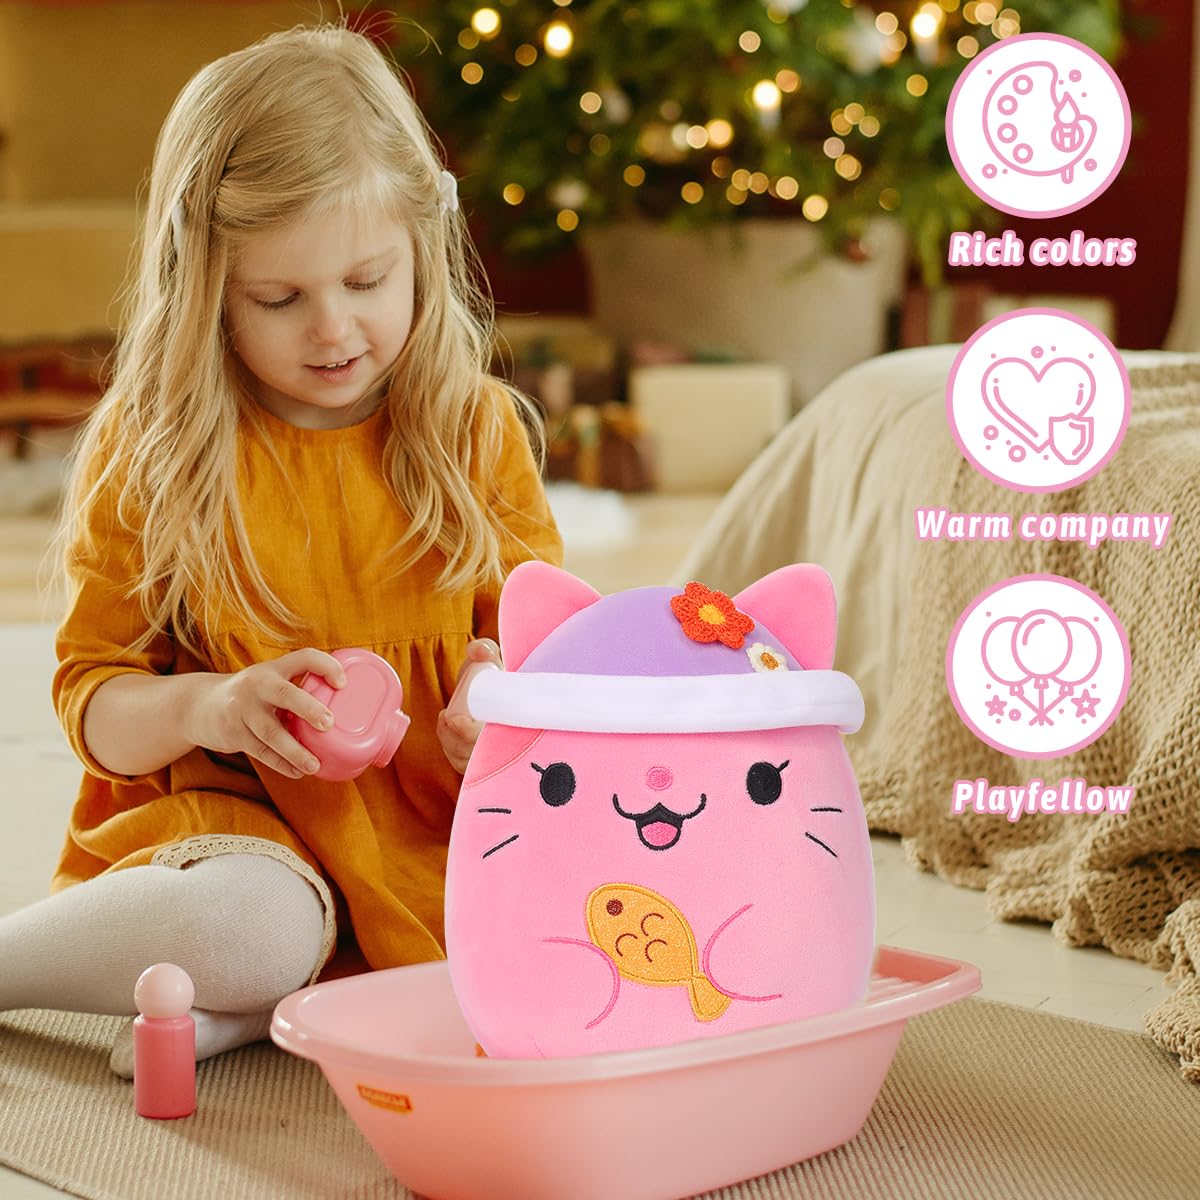 20 CM / 8 inch Cute Pink Cat Plush Pillow Kitten Stuffed Animal, Soft Kawaii Cat Plush Hat Clothing Kids Gift